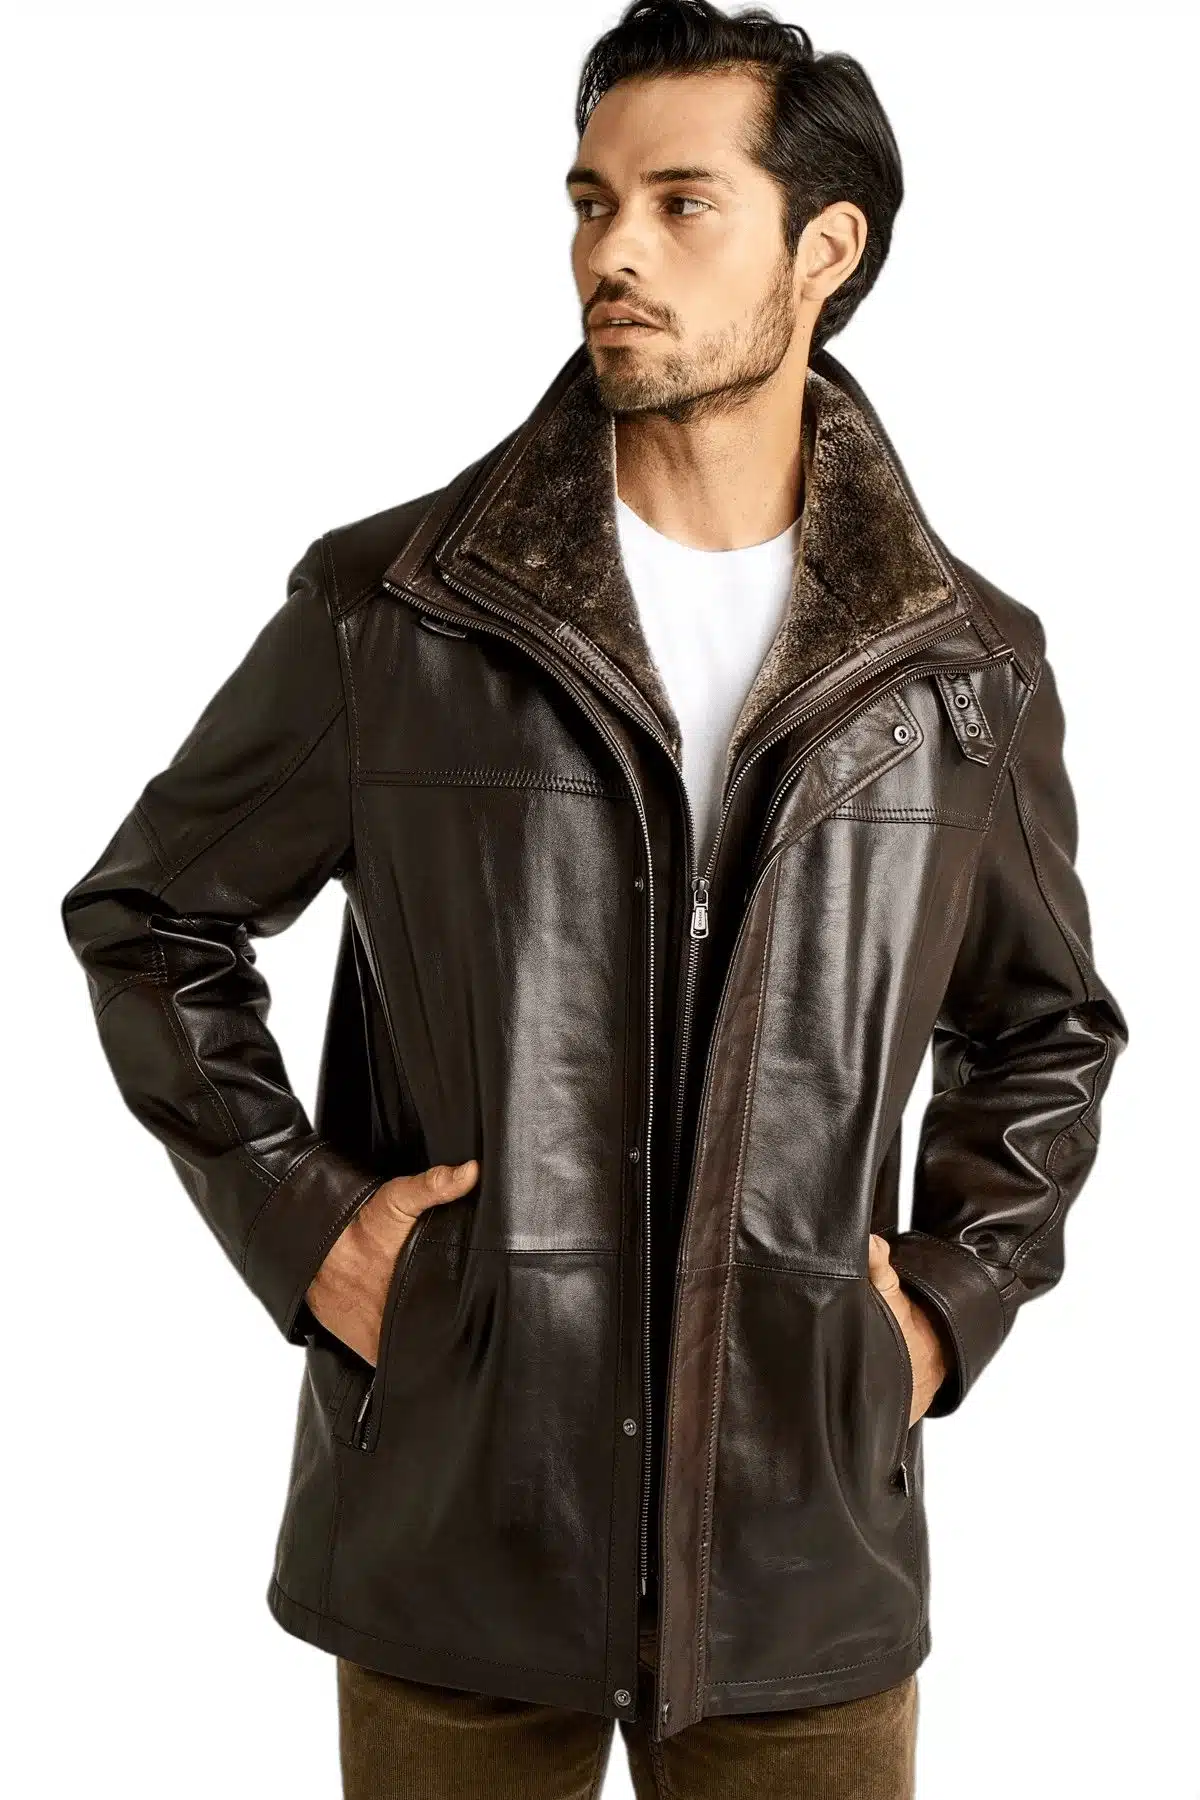 Vintage Style Men’s Leather Jacket in Brown (3)_result